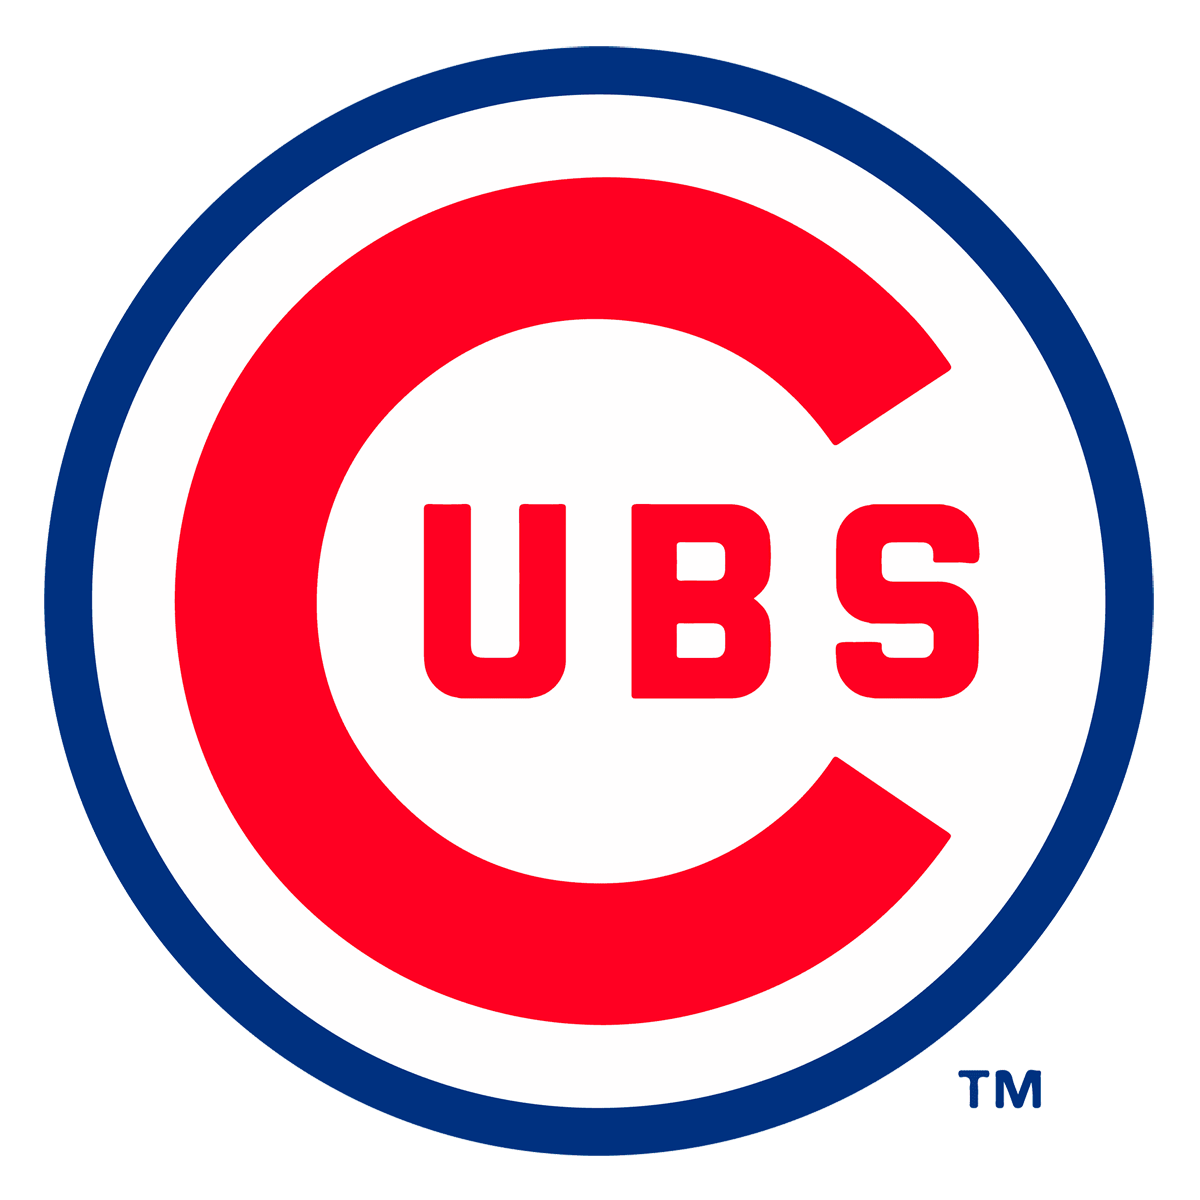 Chicago Cubs logo 1957-1978